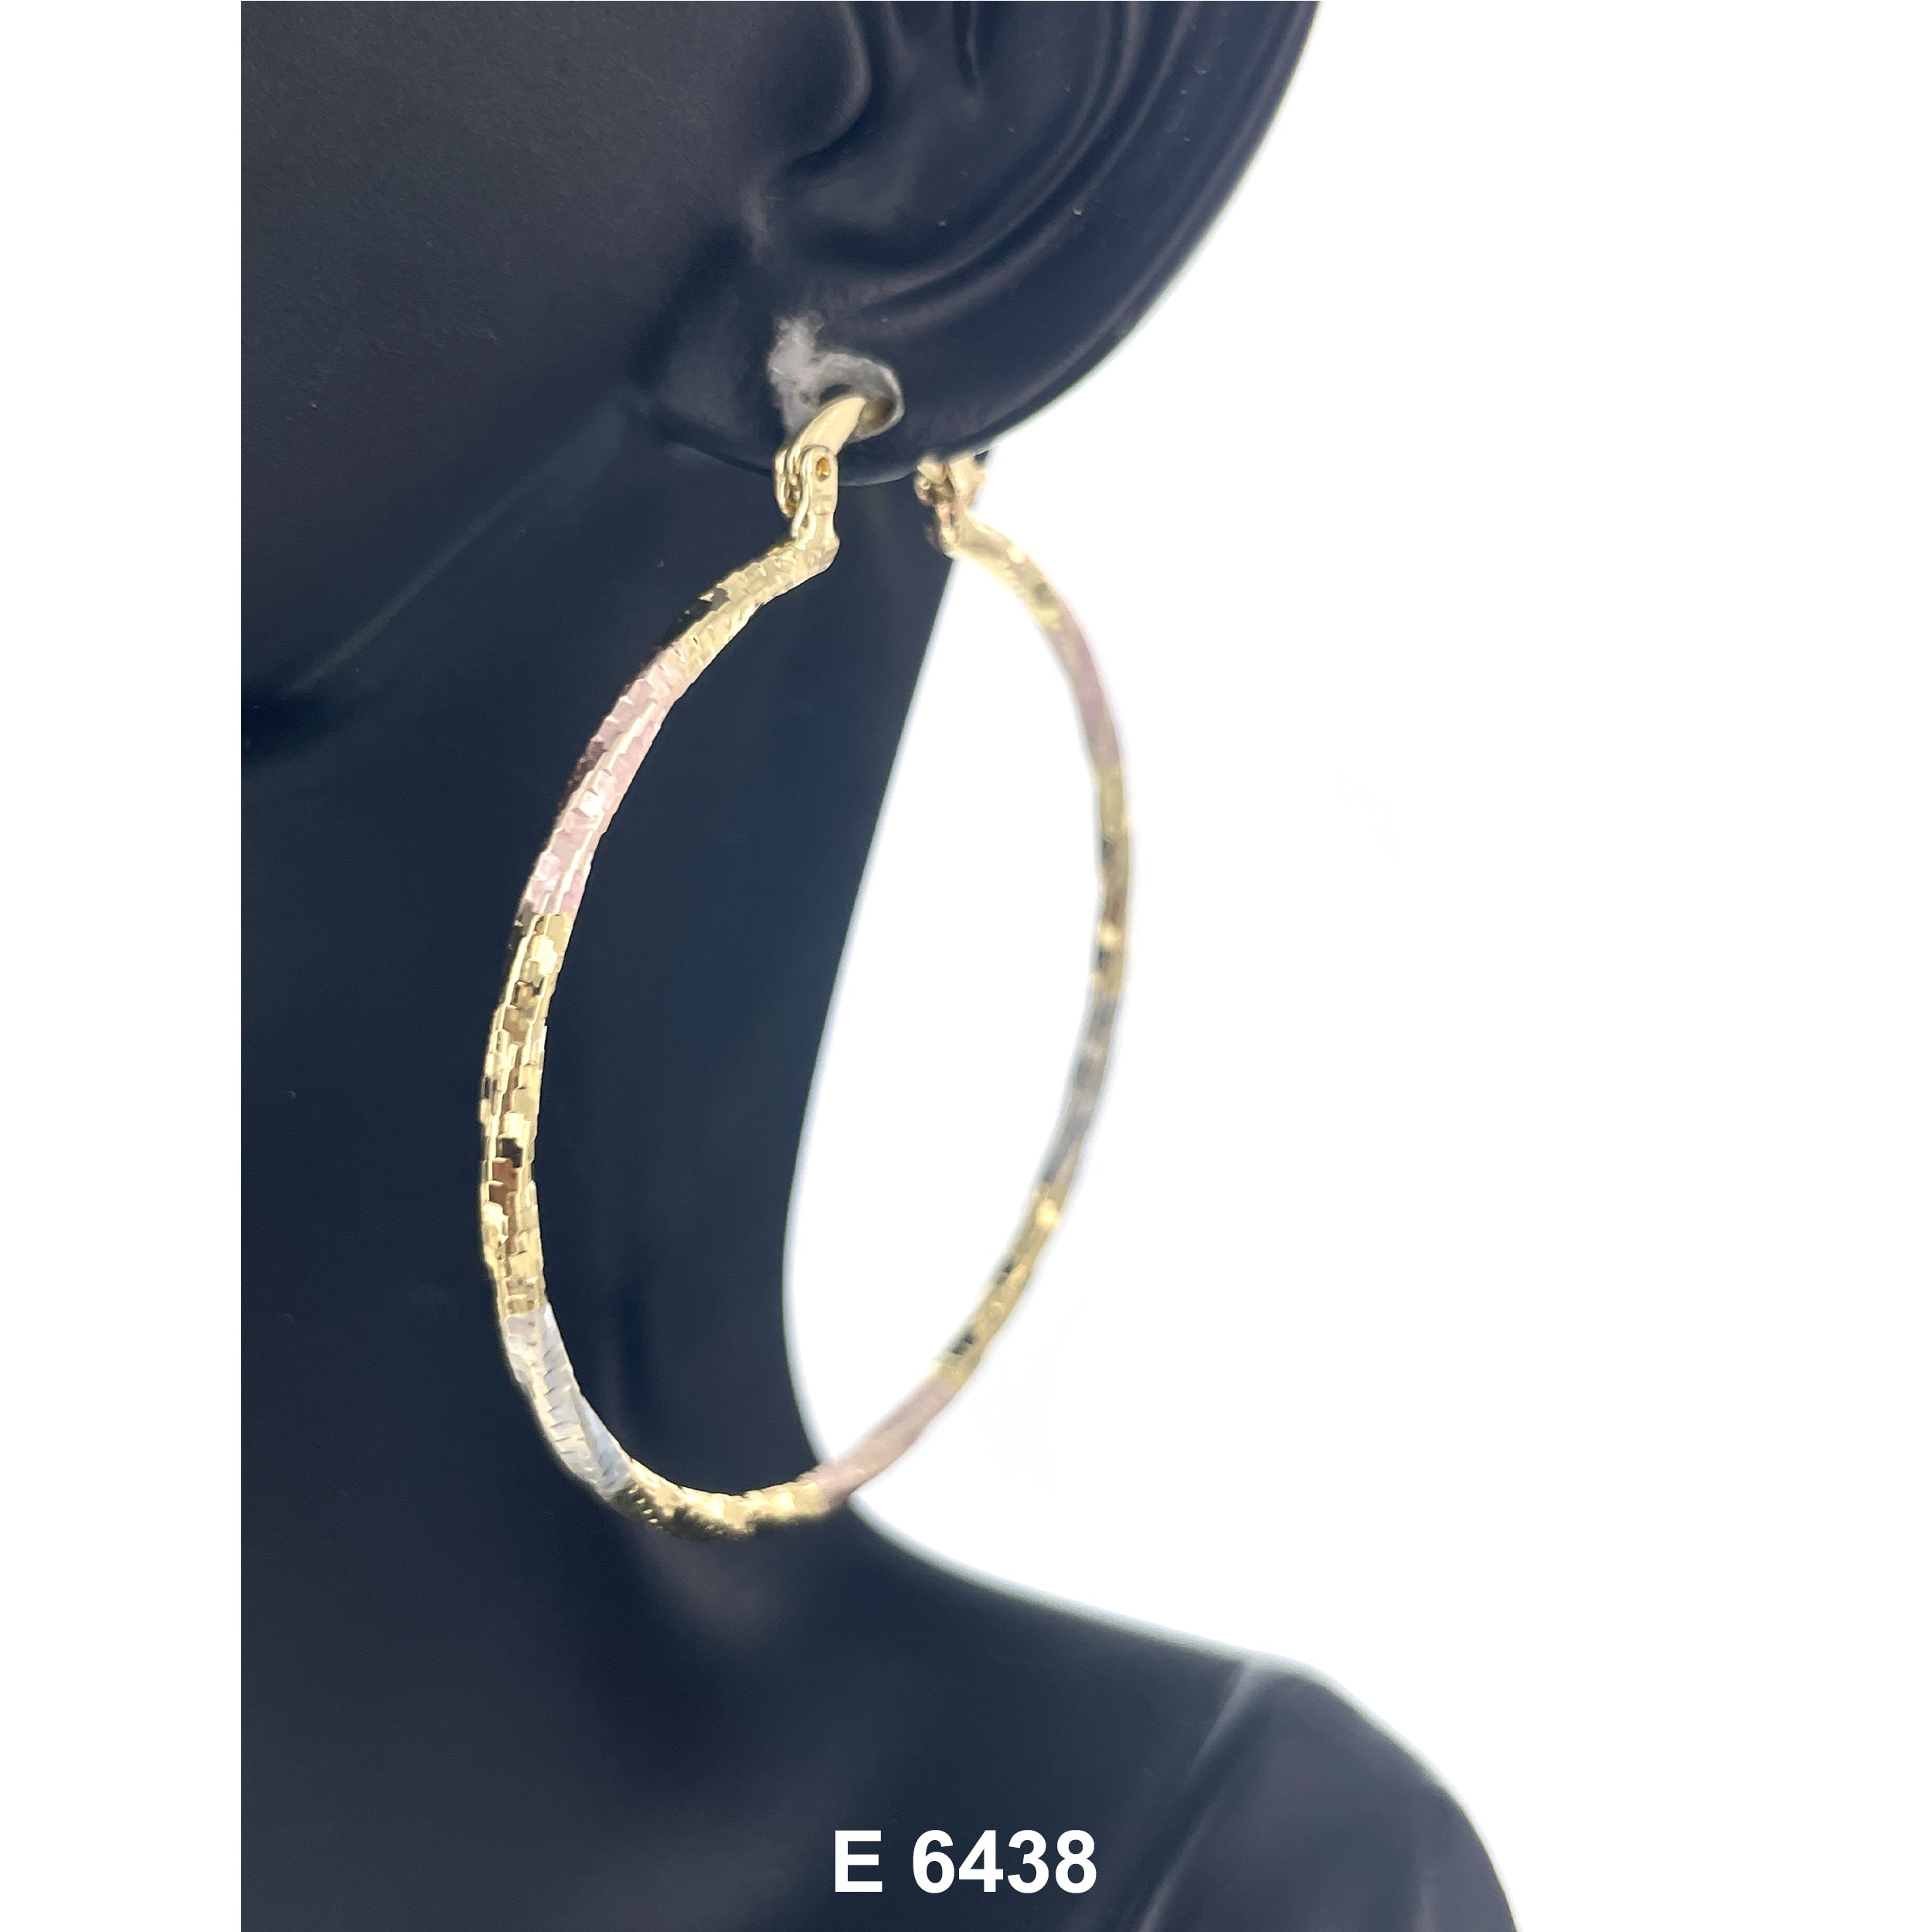 Engraved Hoop Earrings E 6438